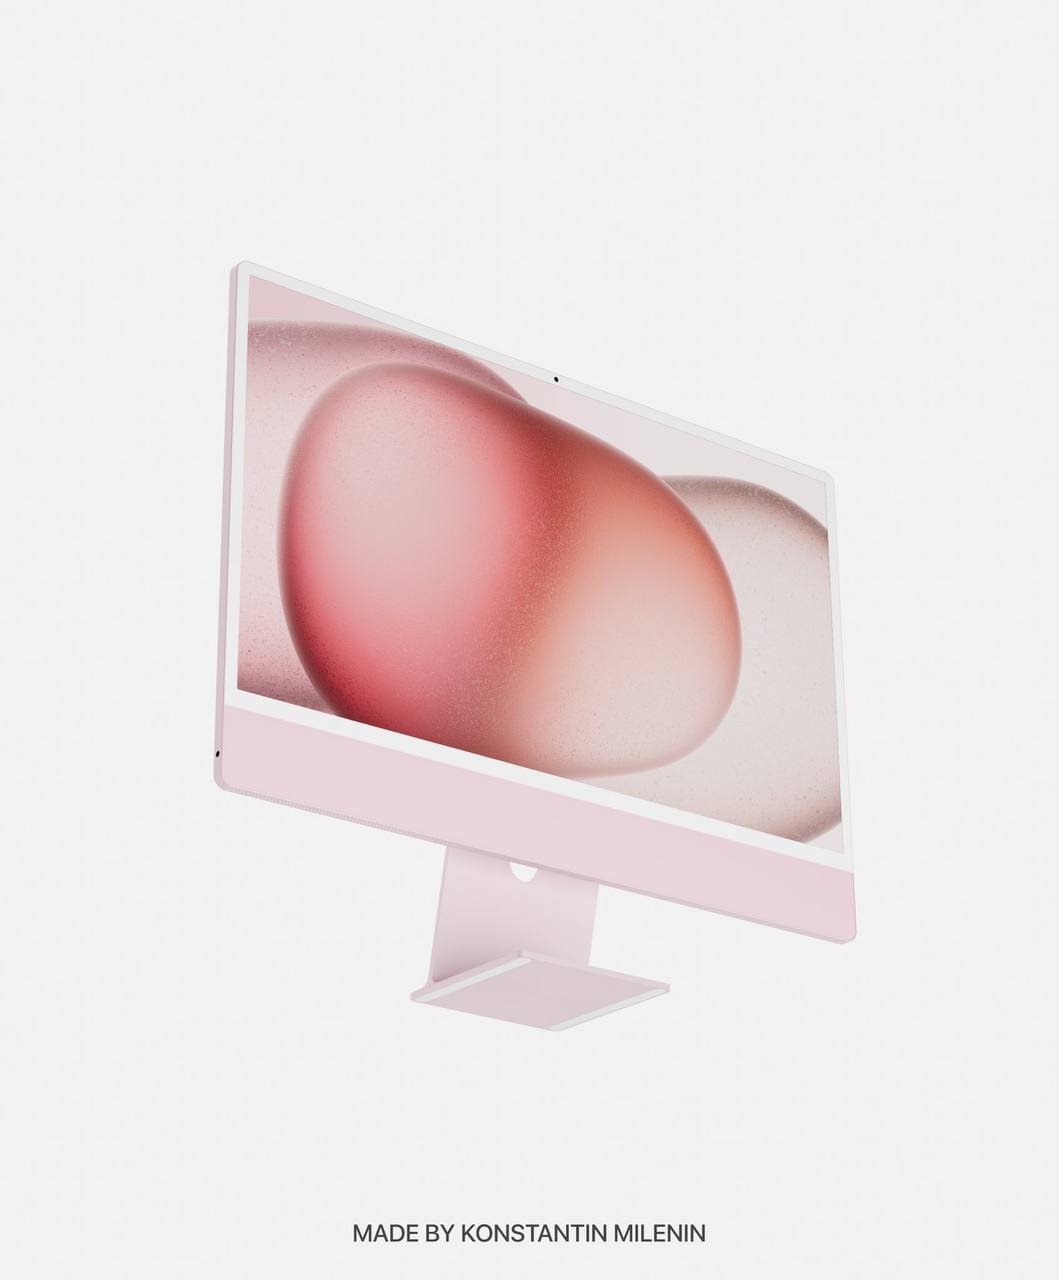 У нового iMac ожидается обновлённая форма ножки (© mi_konstantin)